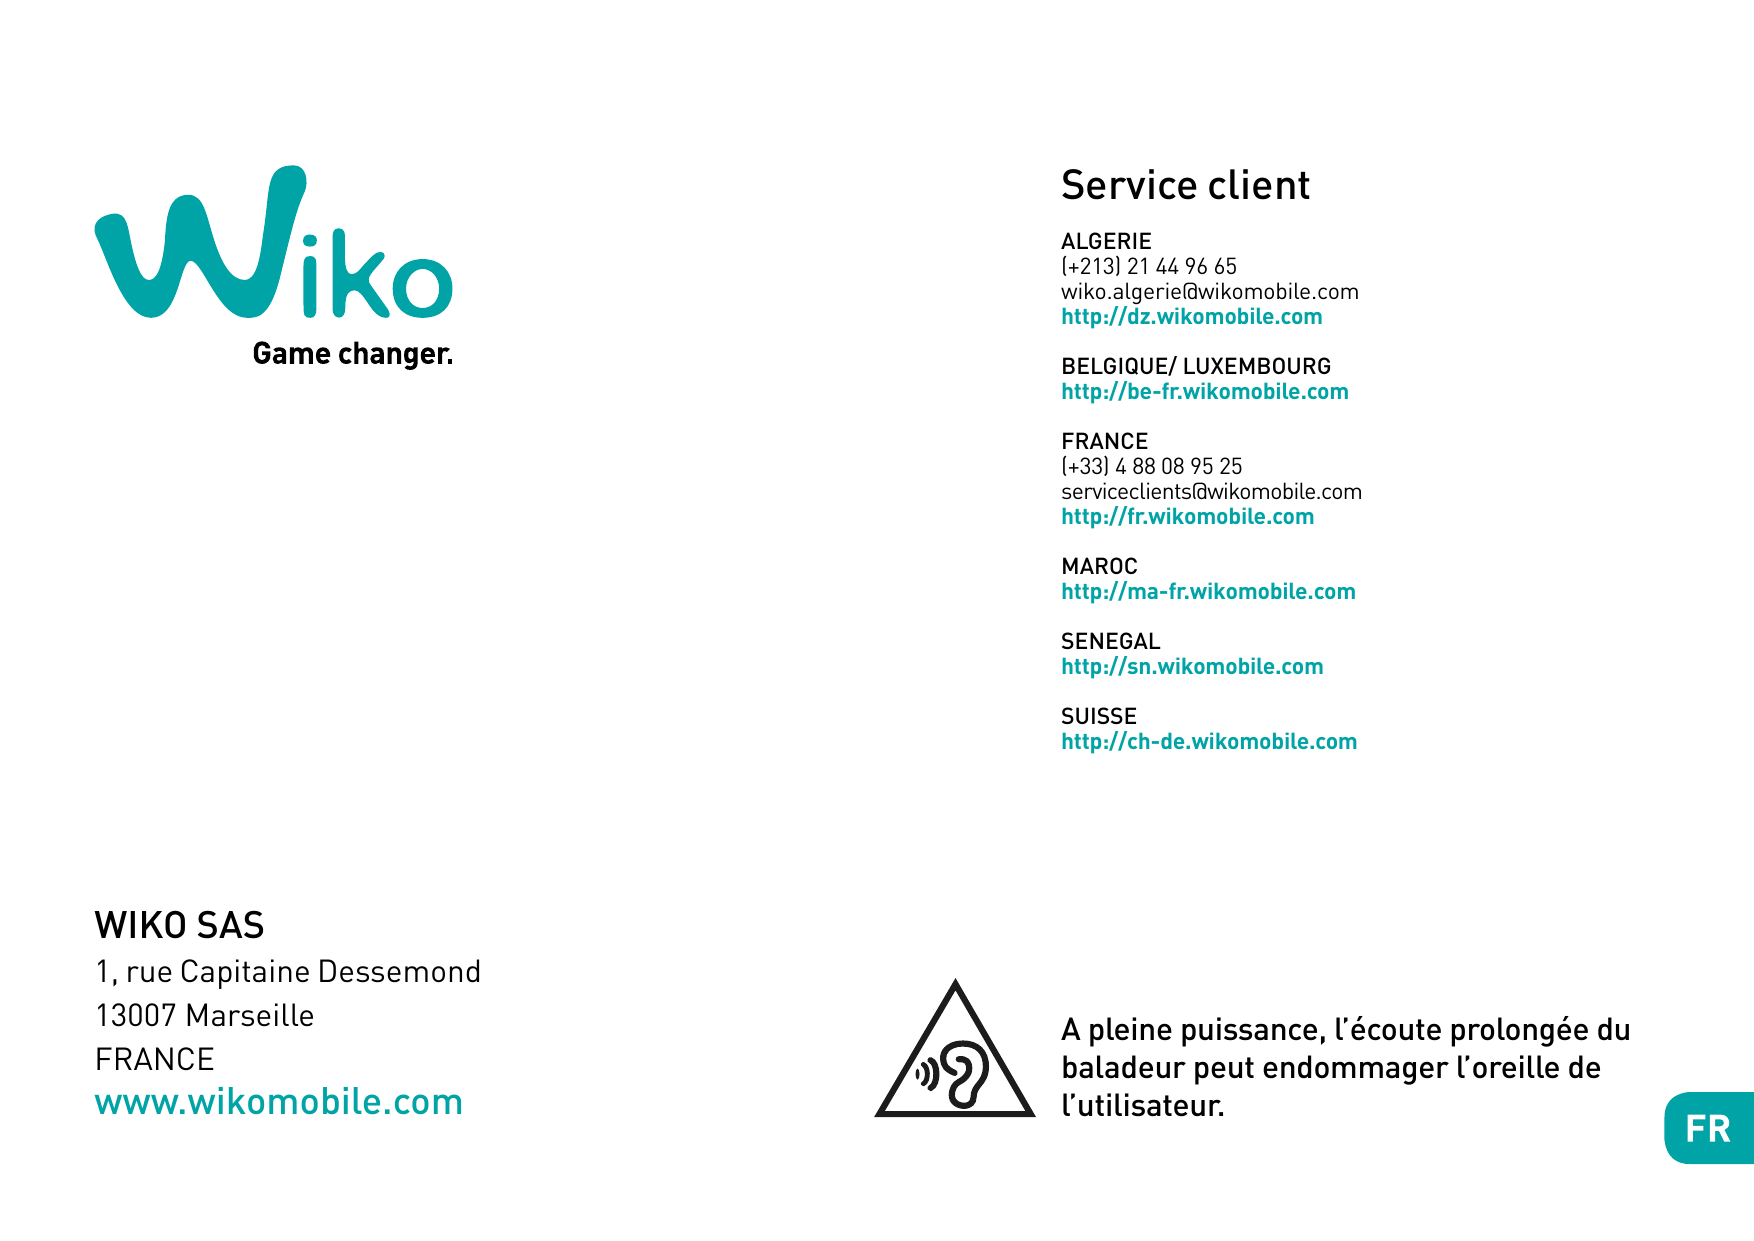 Service clientALGERIE(+213) 21 44 96 65wiko.algerie@wikomobile.comhttp://dz.wikomobile.comBELGIQUE/ LUXEMBOURGhttp://be-fr.wikom